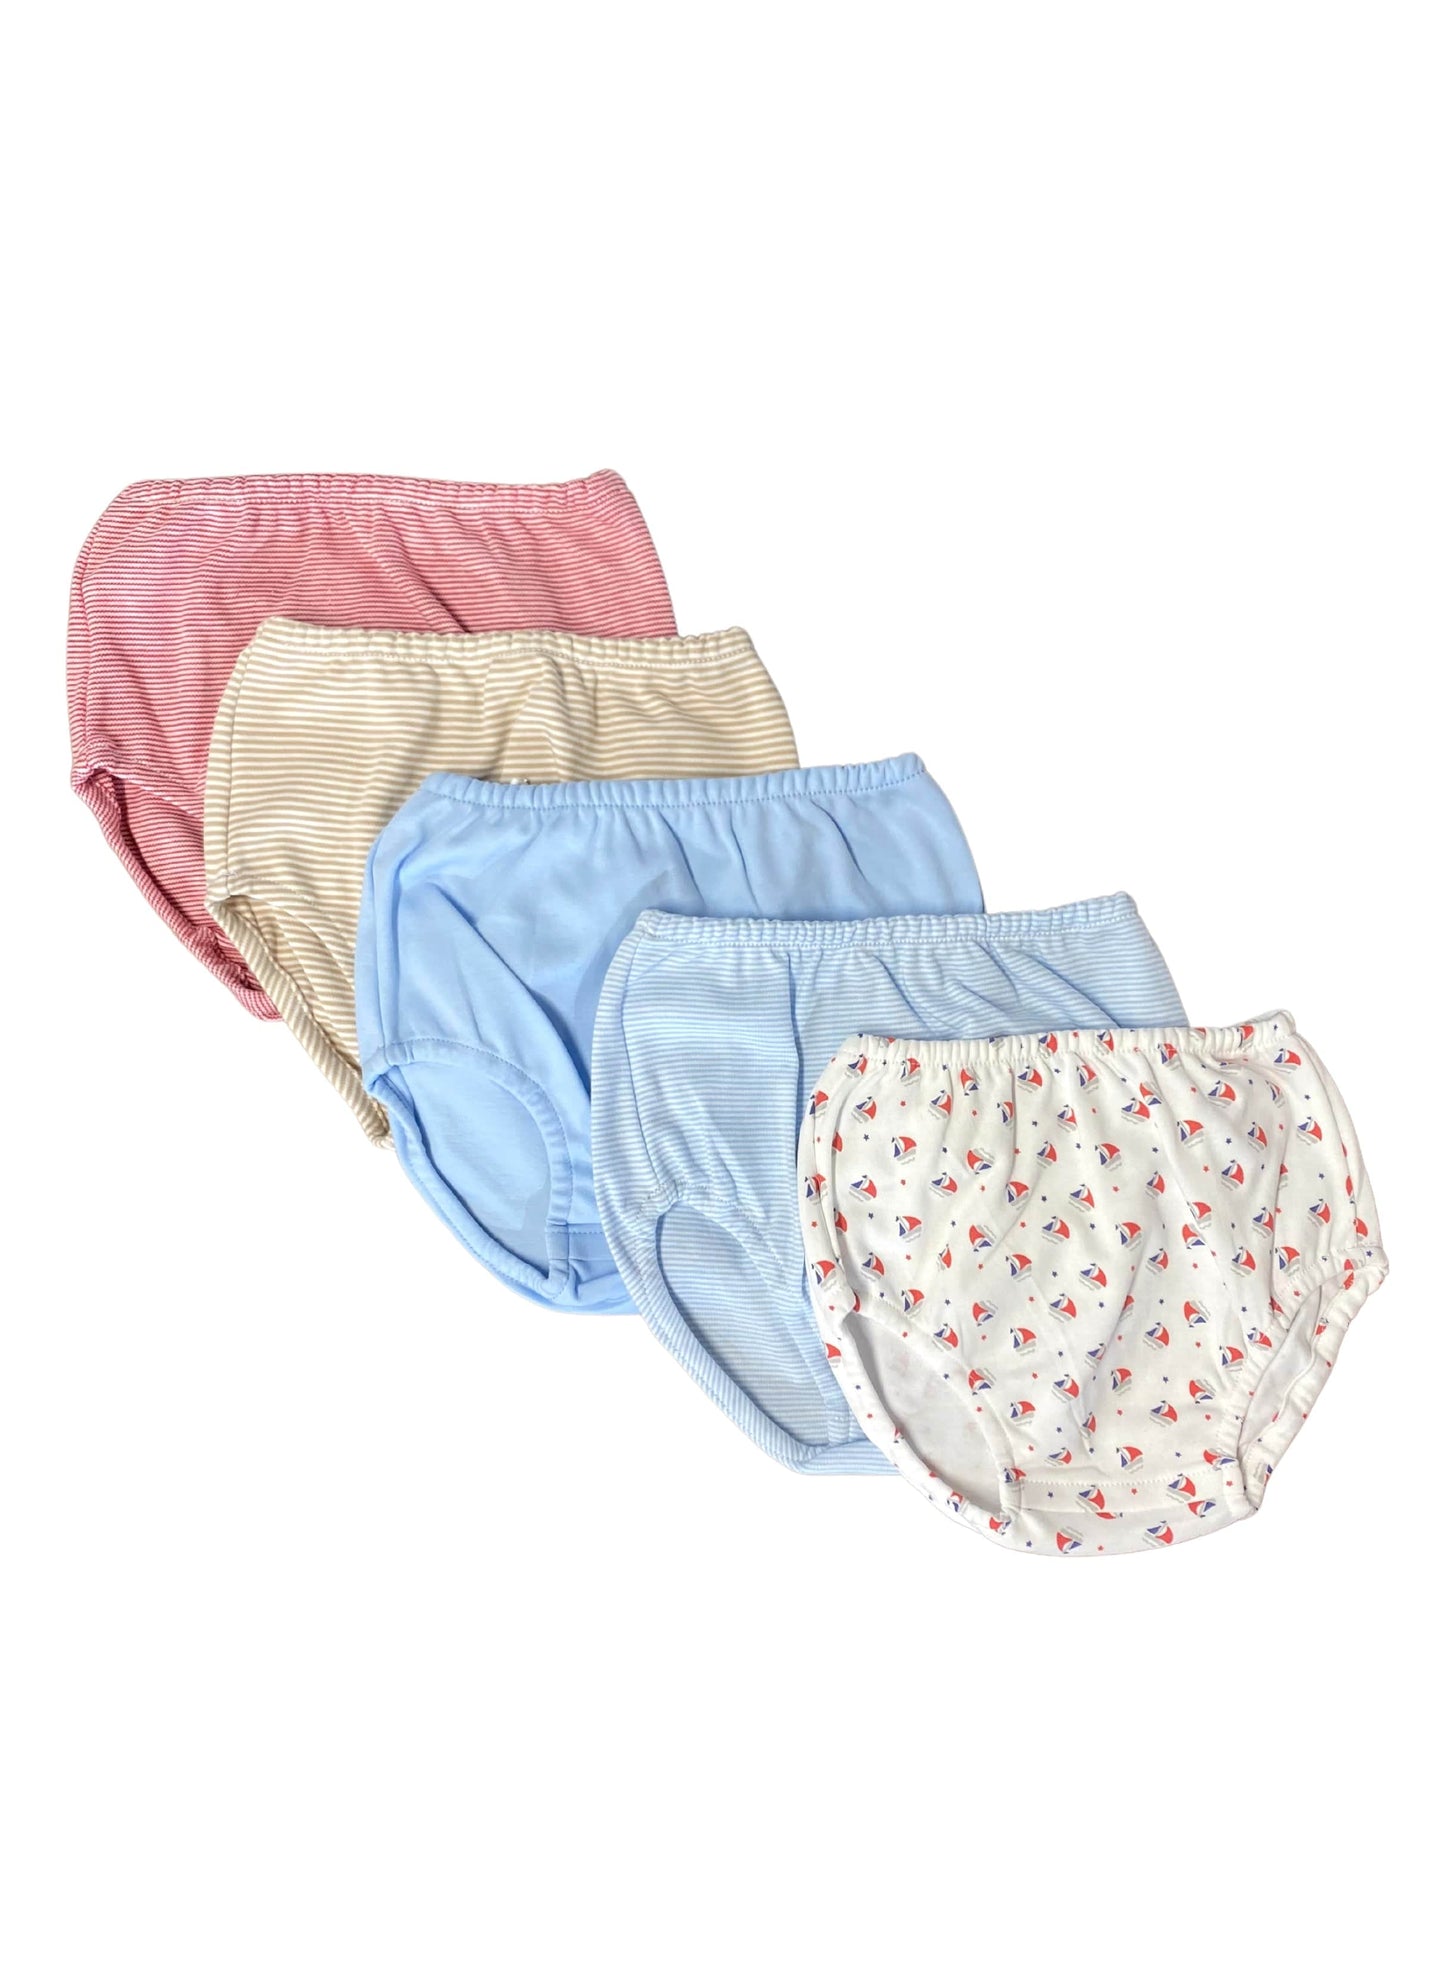 Cotton Knit Diaper Cover, Sailboats